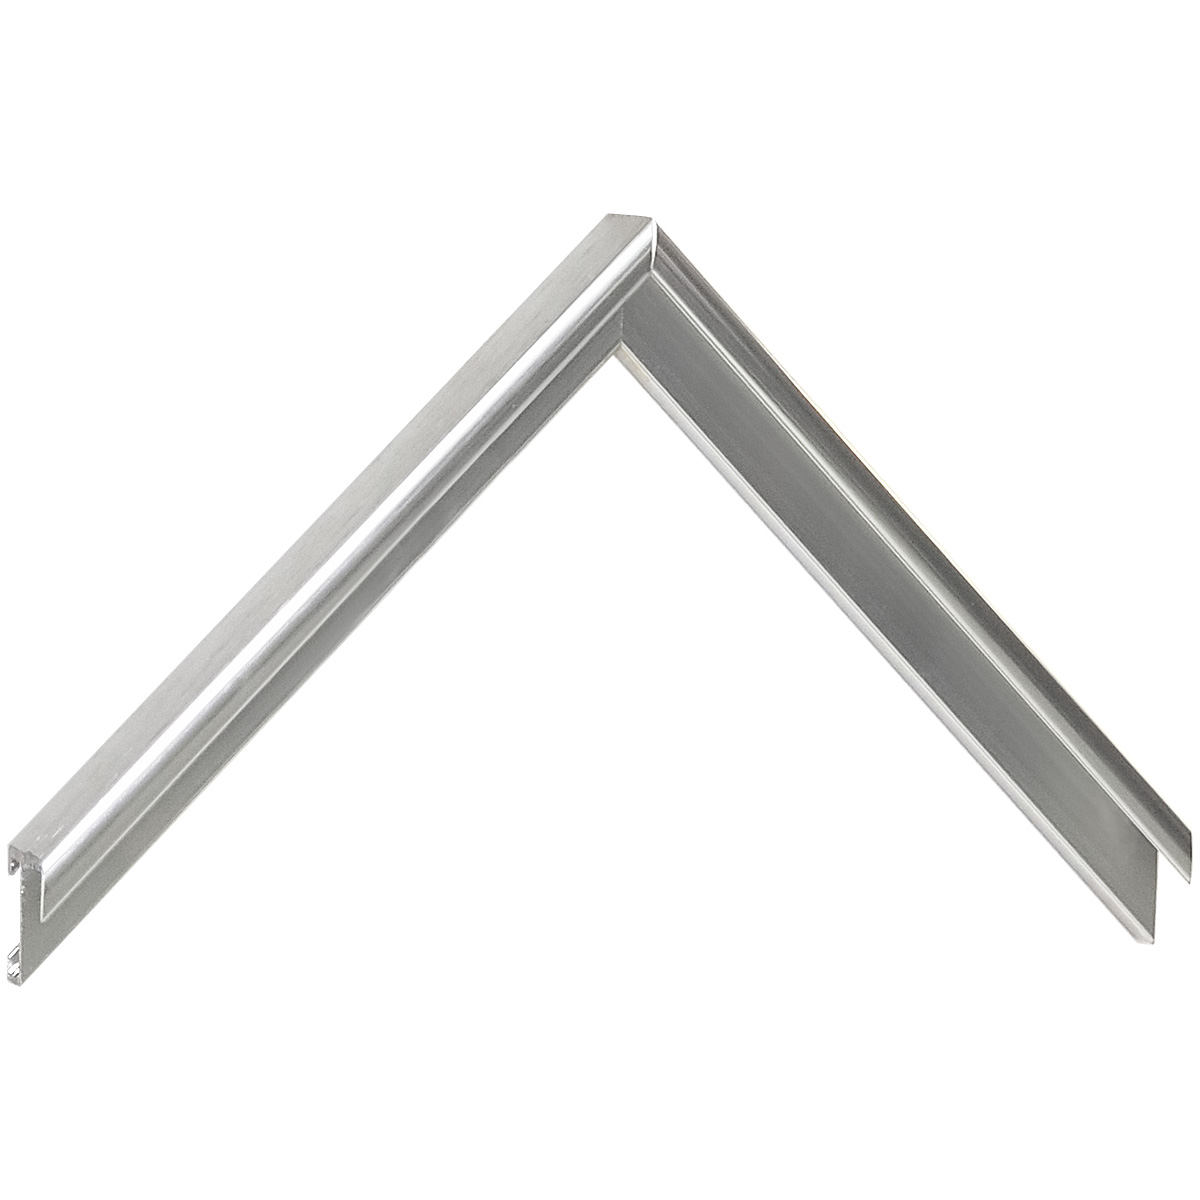 Profil din aluminiu plat serie 11 argintiu satinat - Mostră